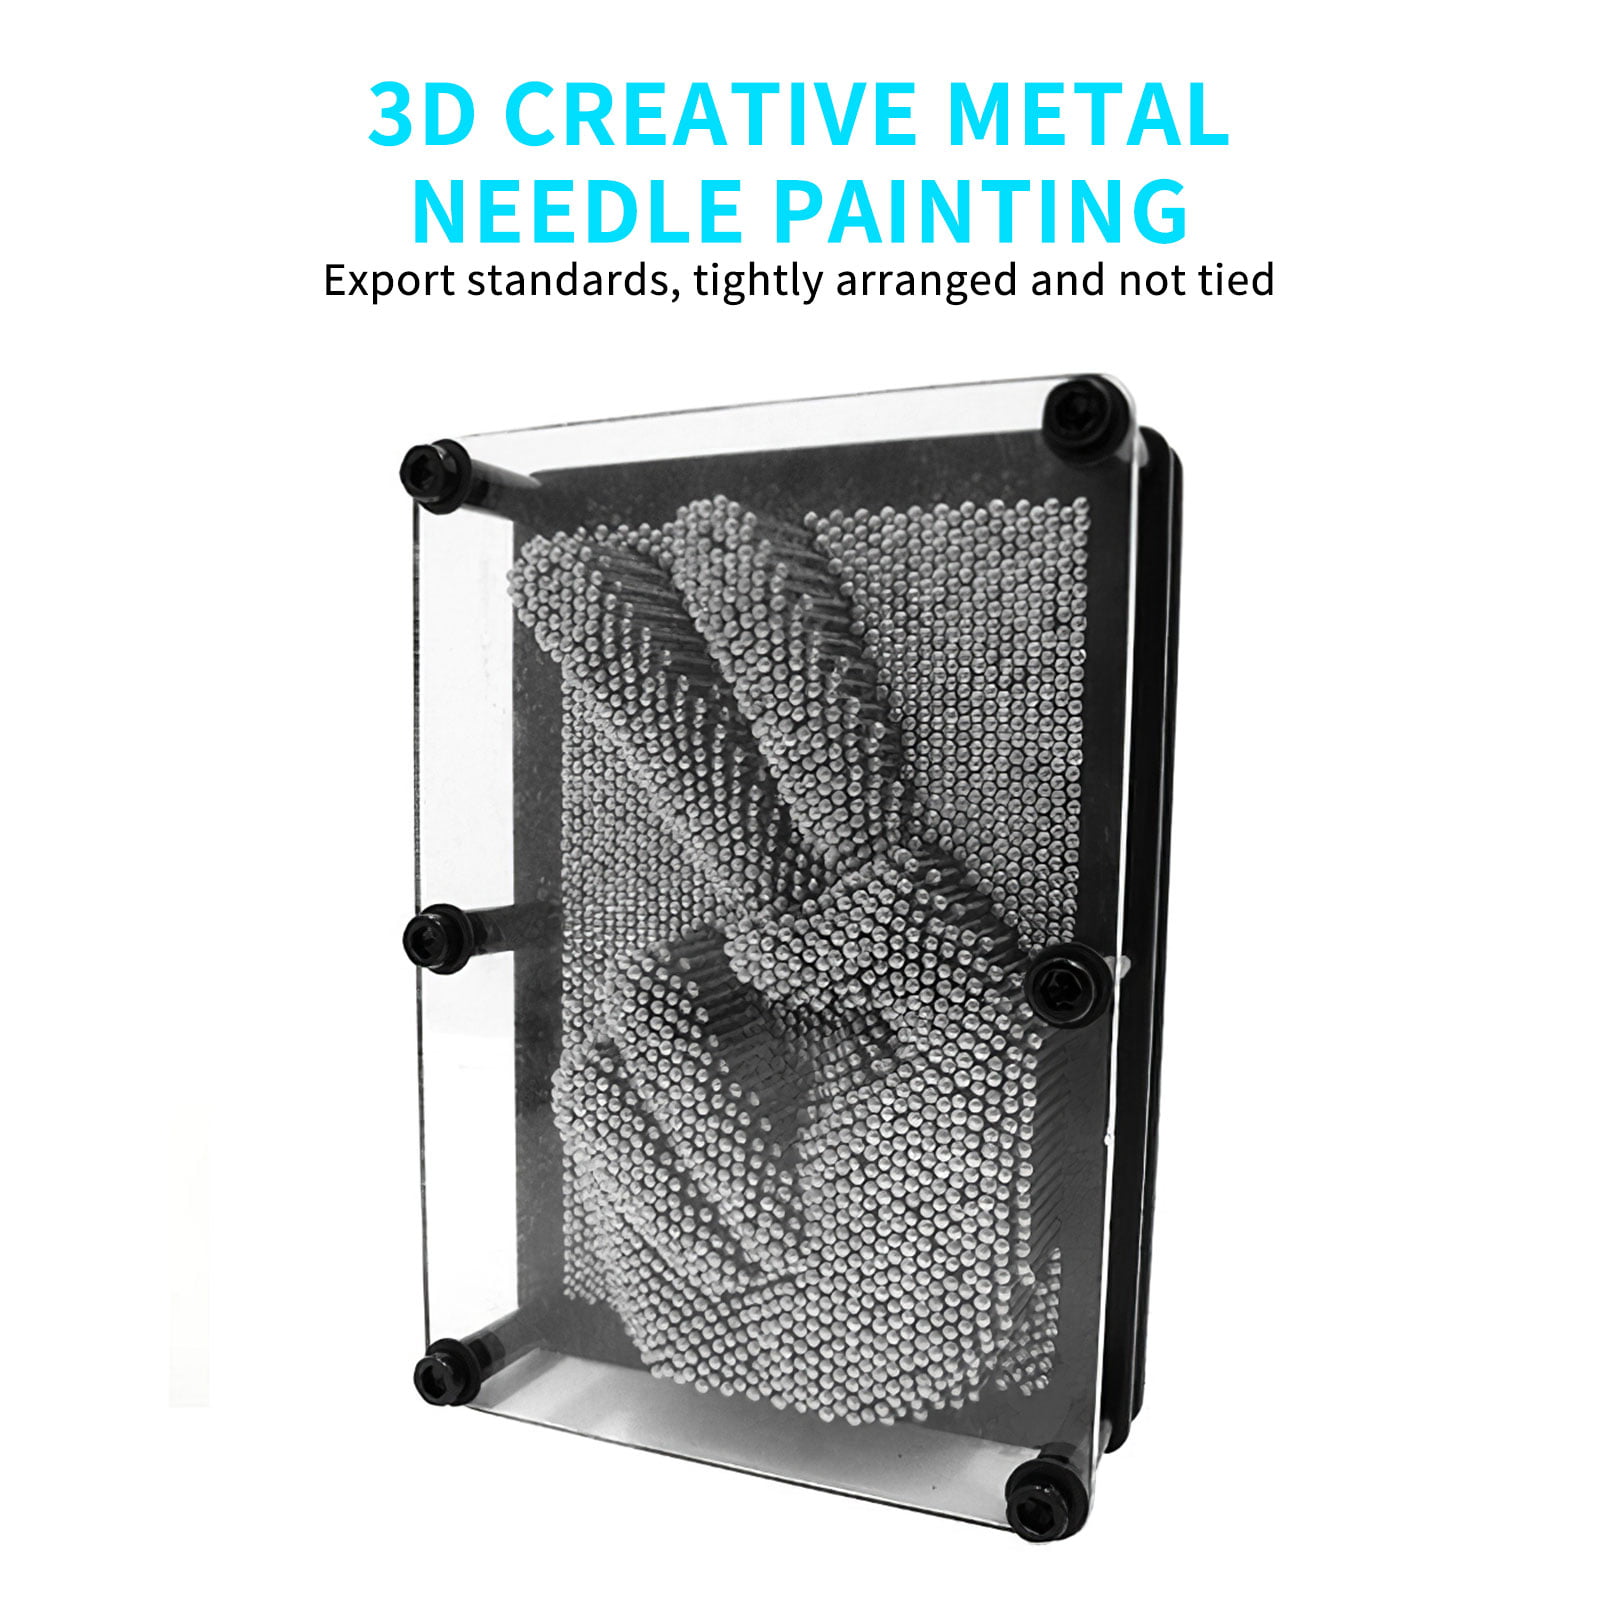 3D Large Metal Pin Art Classic Impression Picture Maker Desk Toy Frame Gadget 